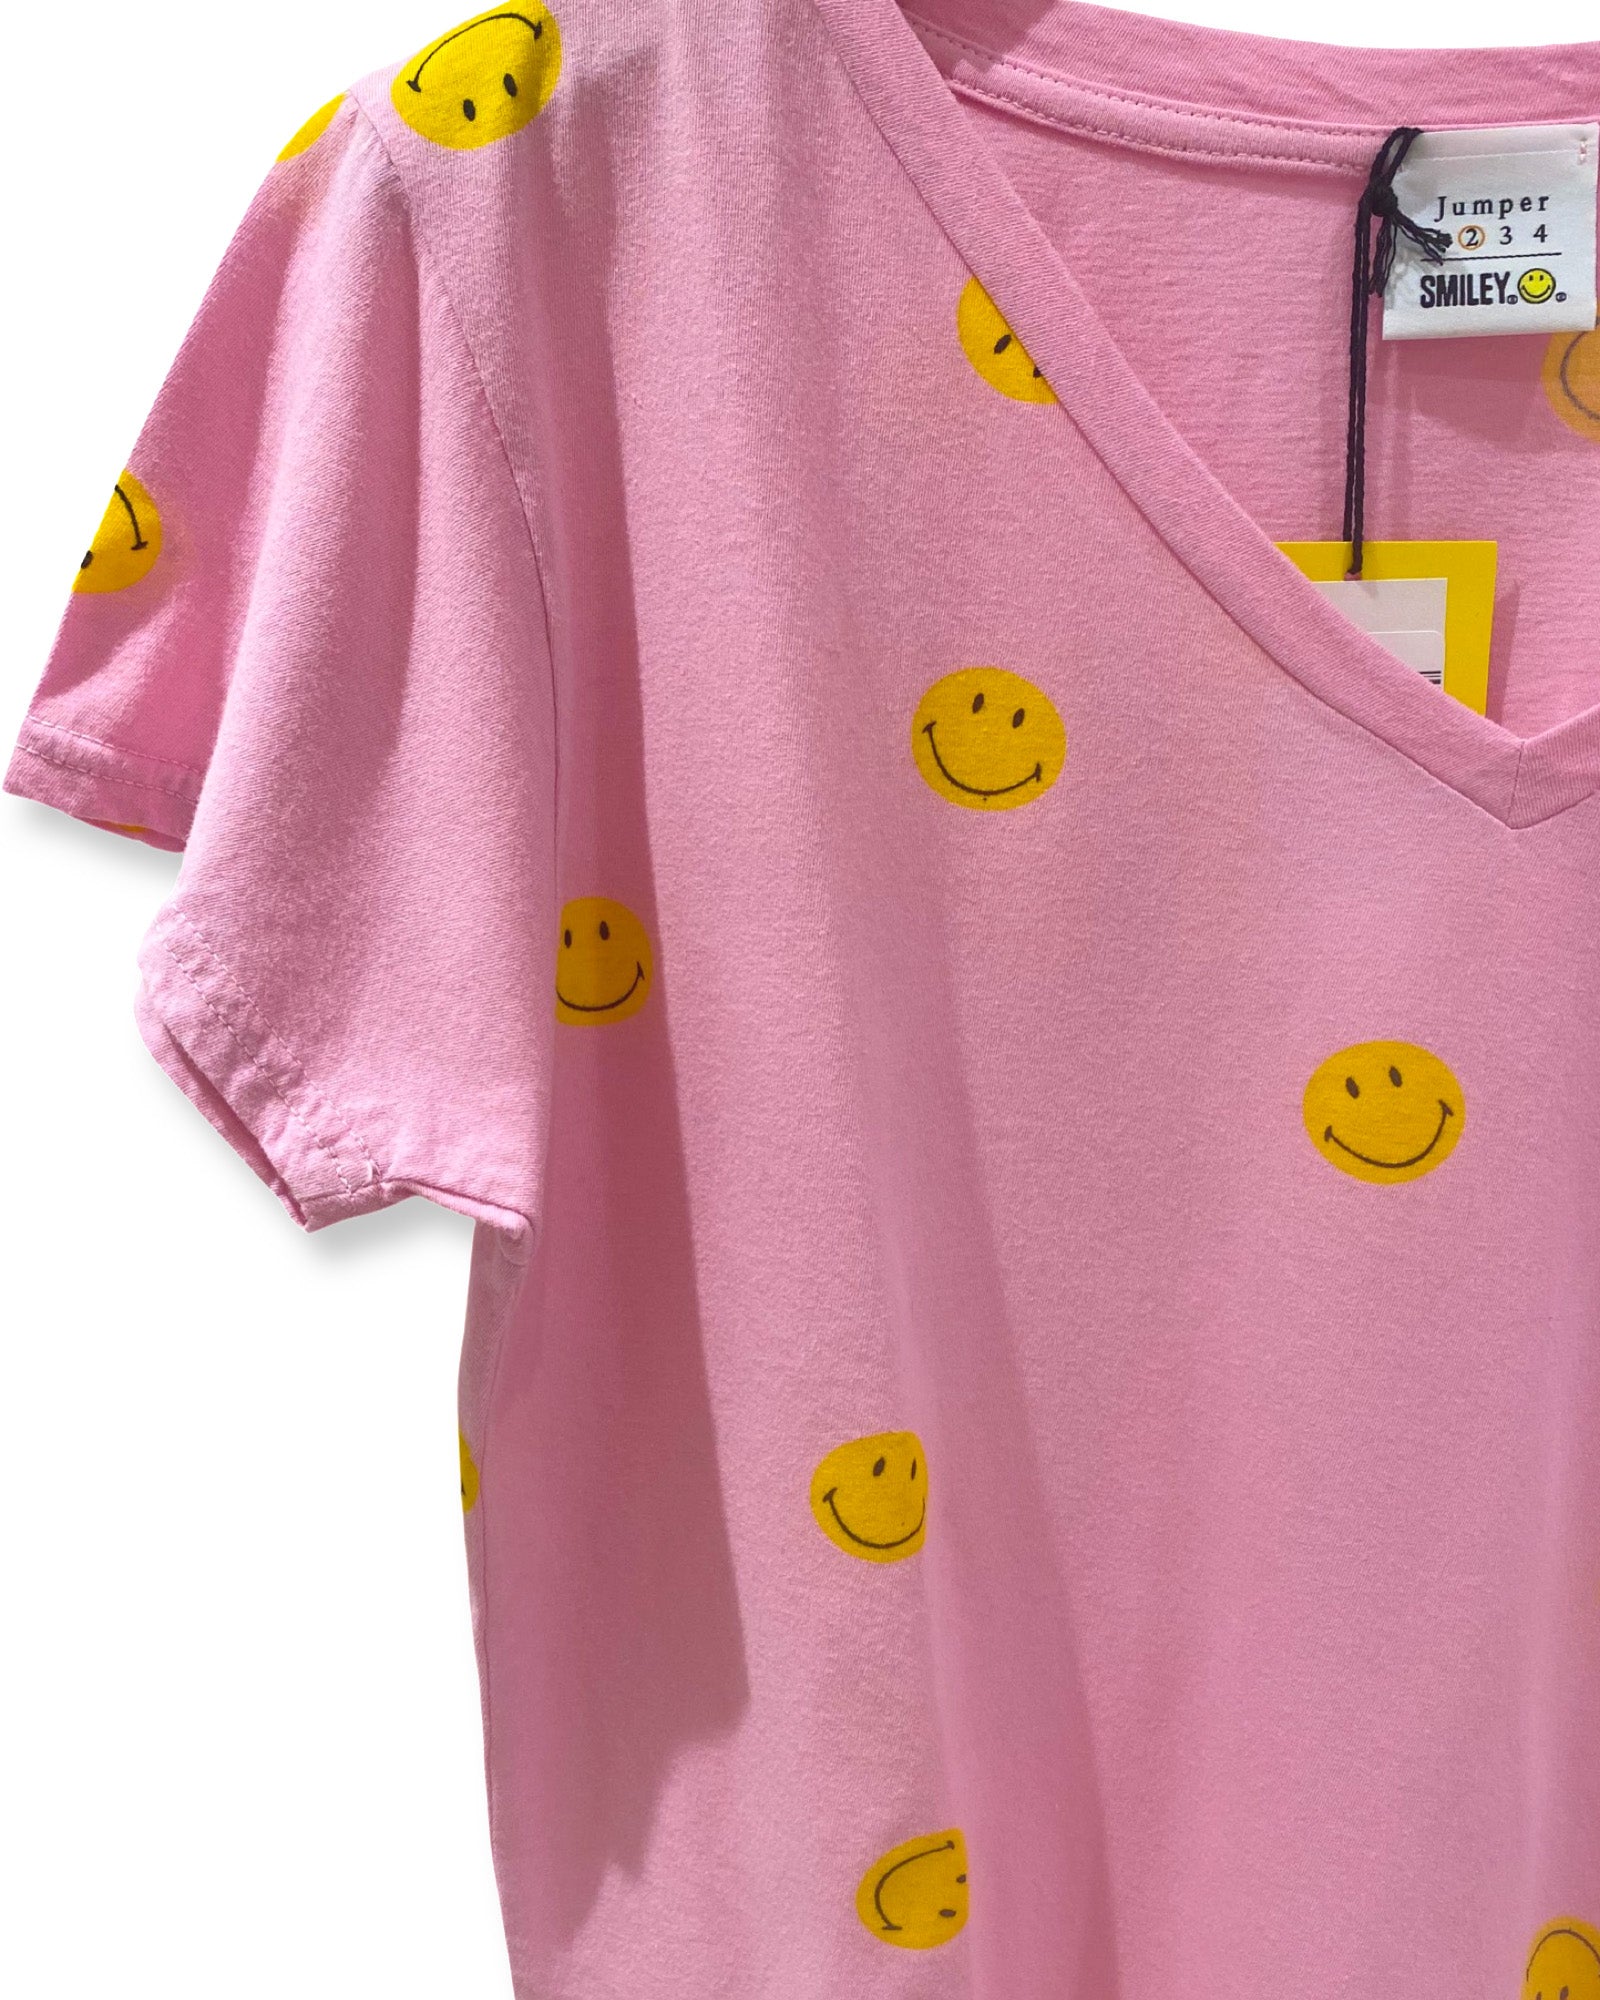 JU All Over Smiley Vee T-shirt in Neon Pink